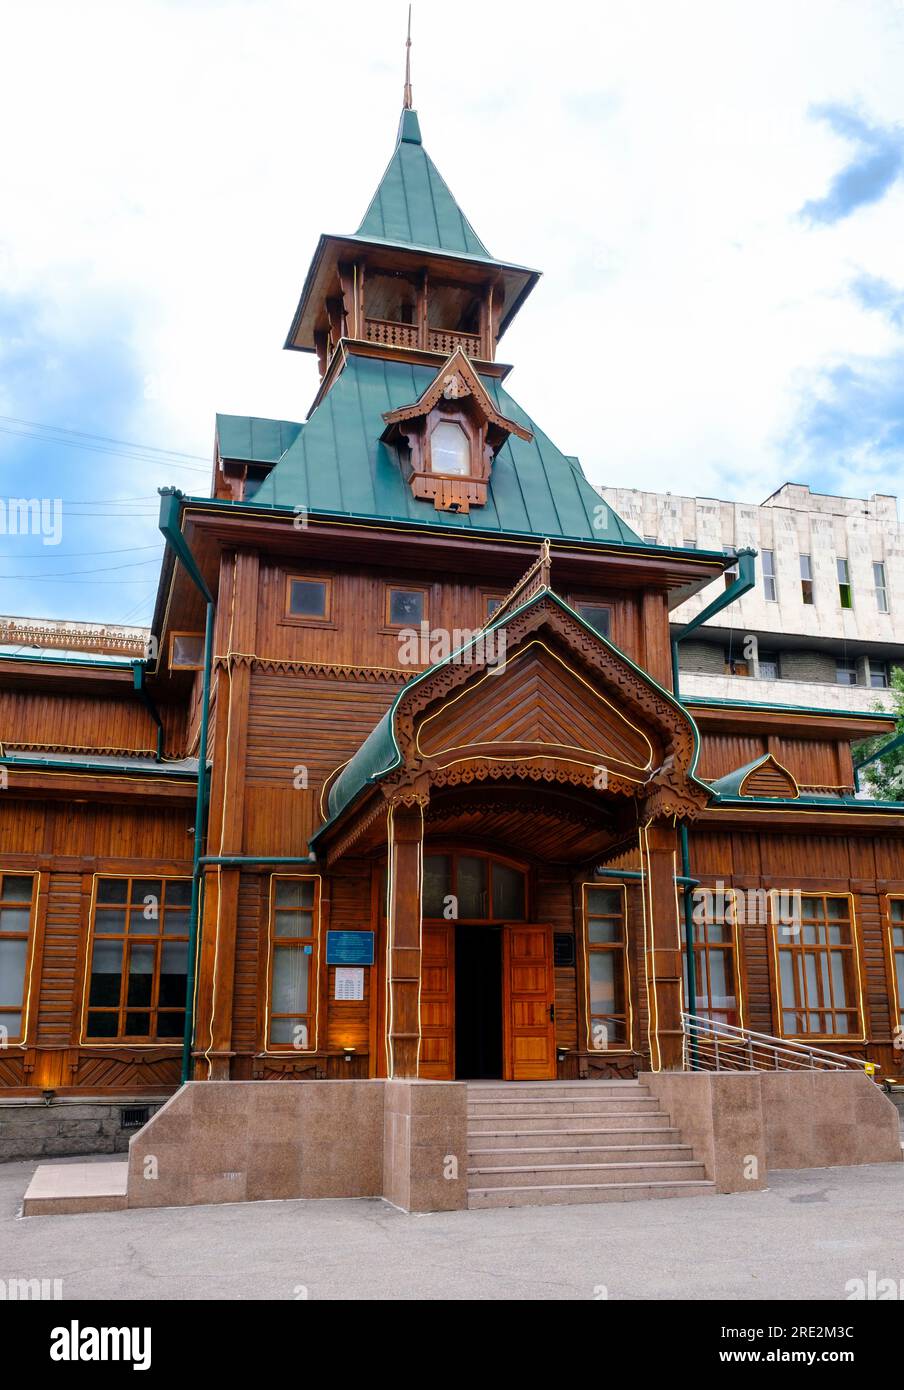 Kazakhstan, Almaty. Museum of Folk Musical Instruments. Stock Photo